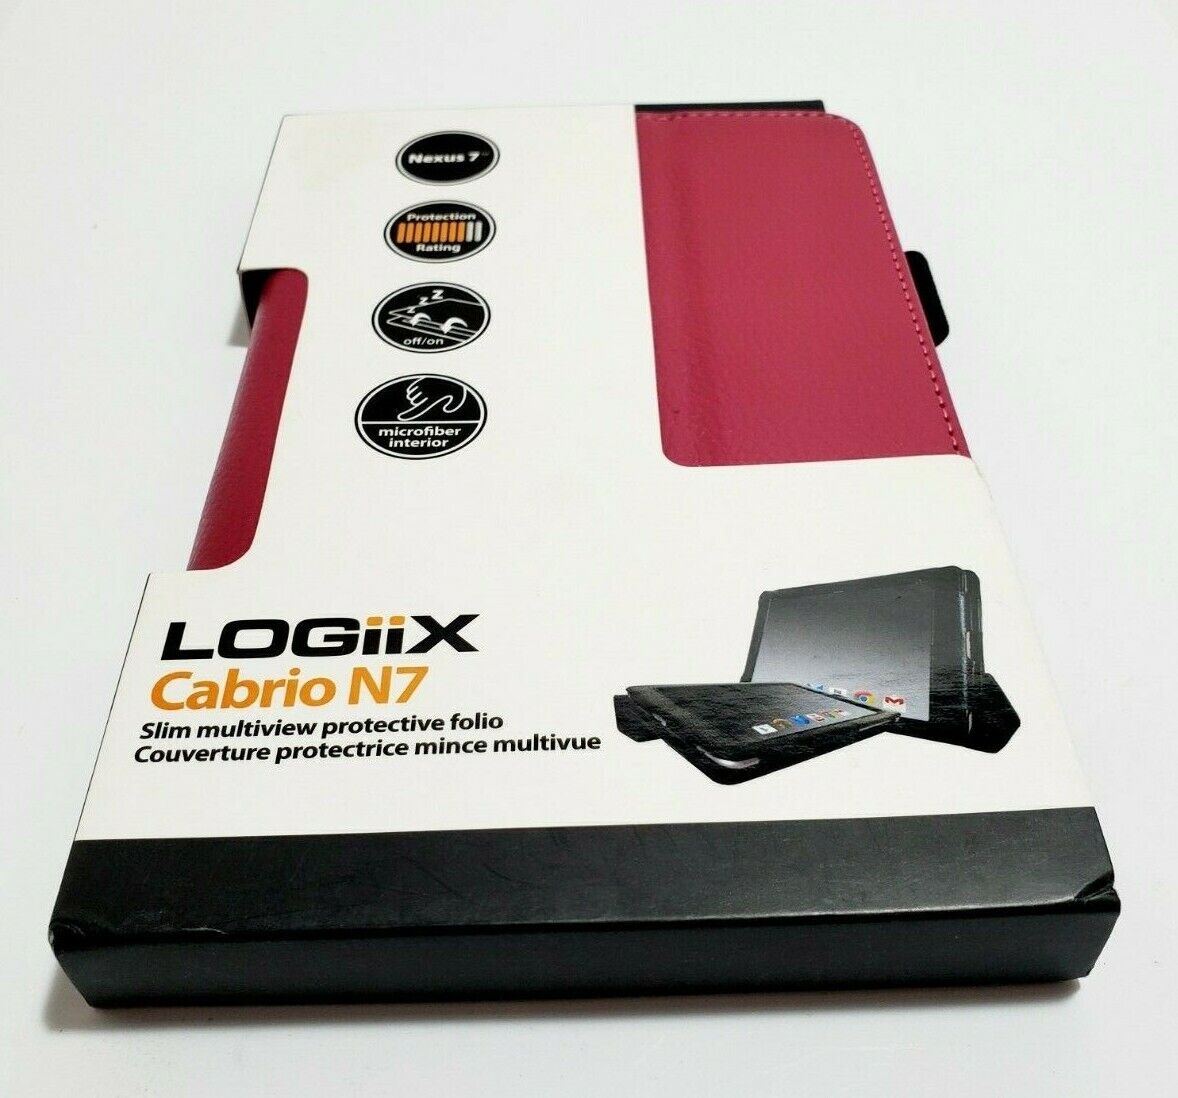 Logiix Cabrio N7 Folio for Google Nexus 7